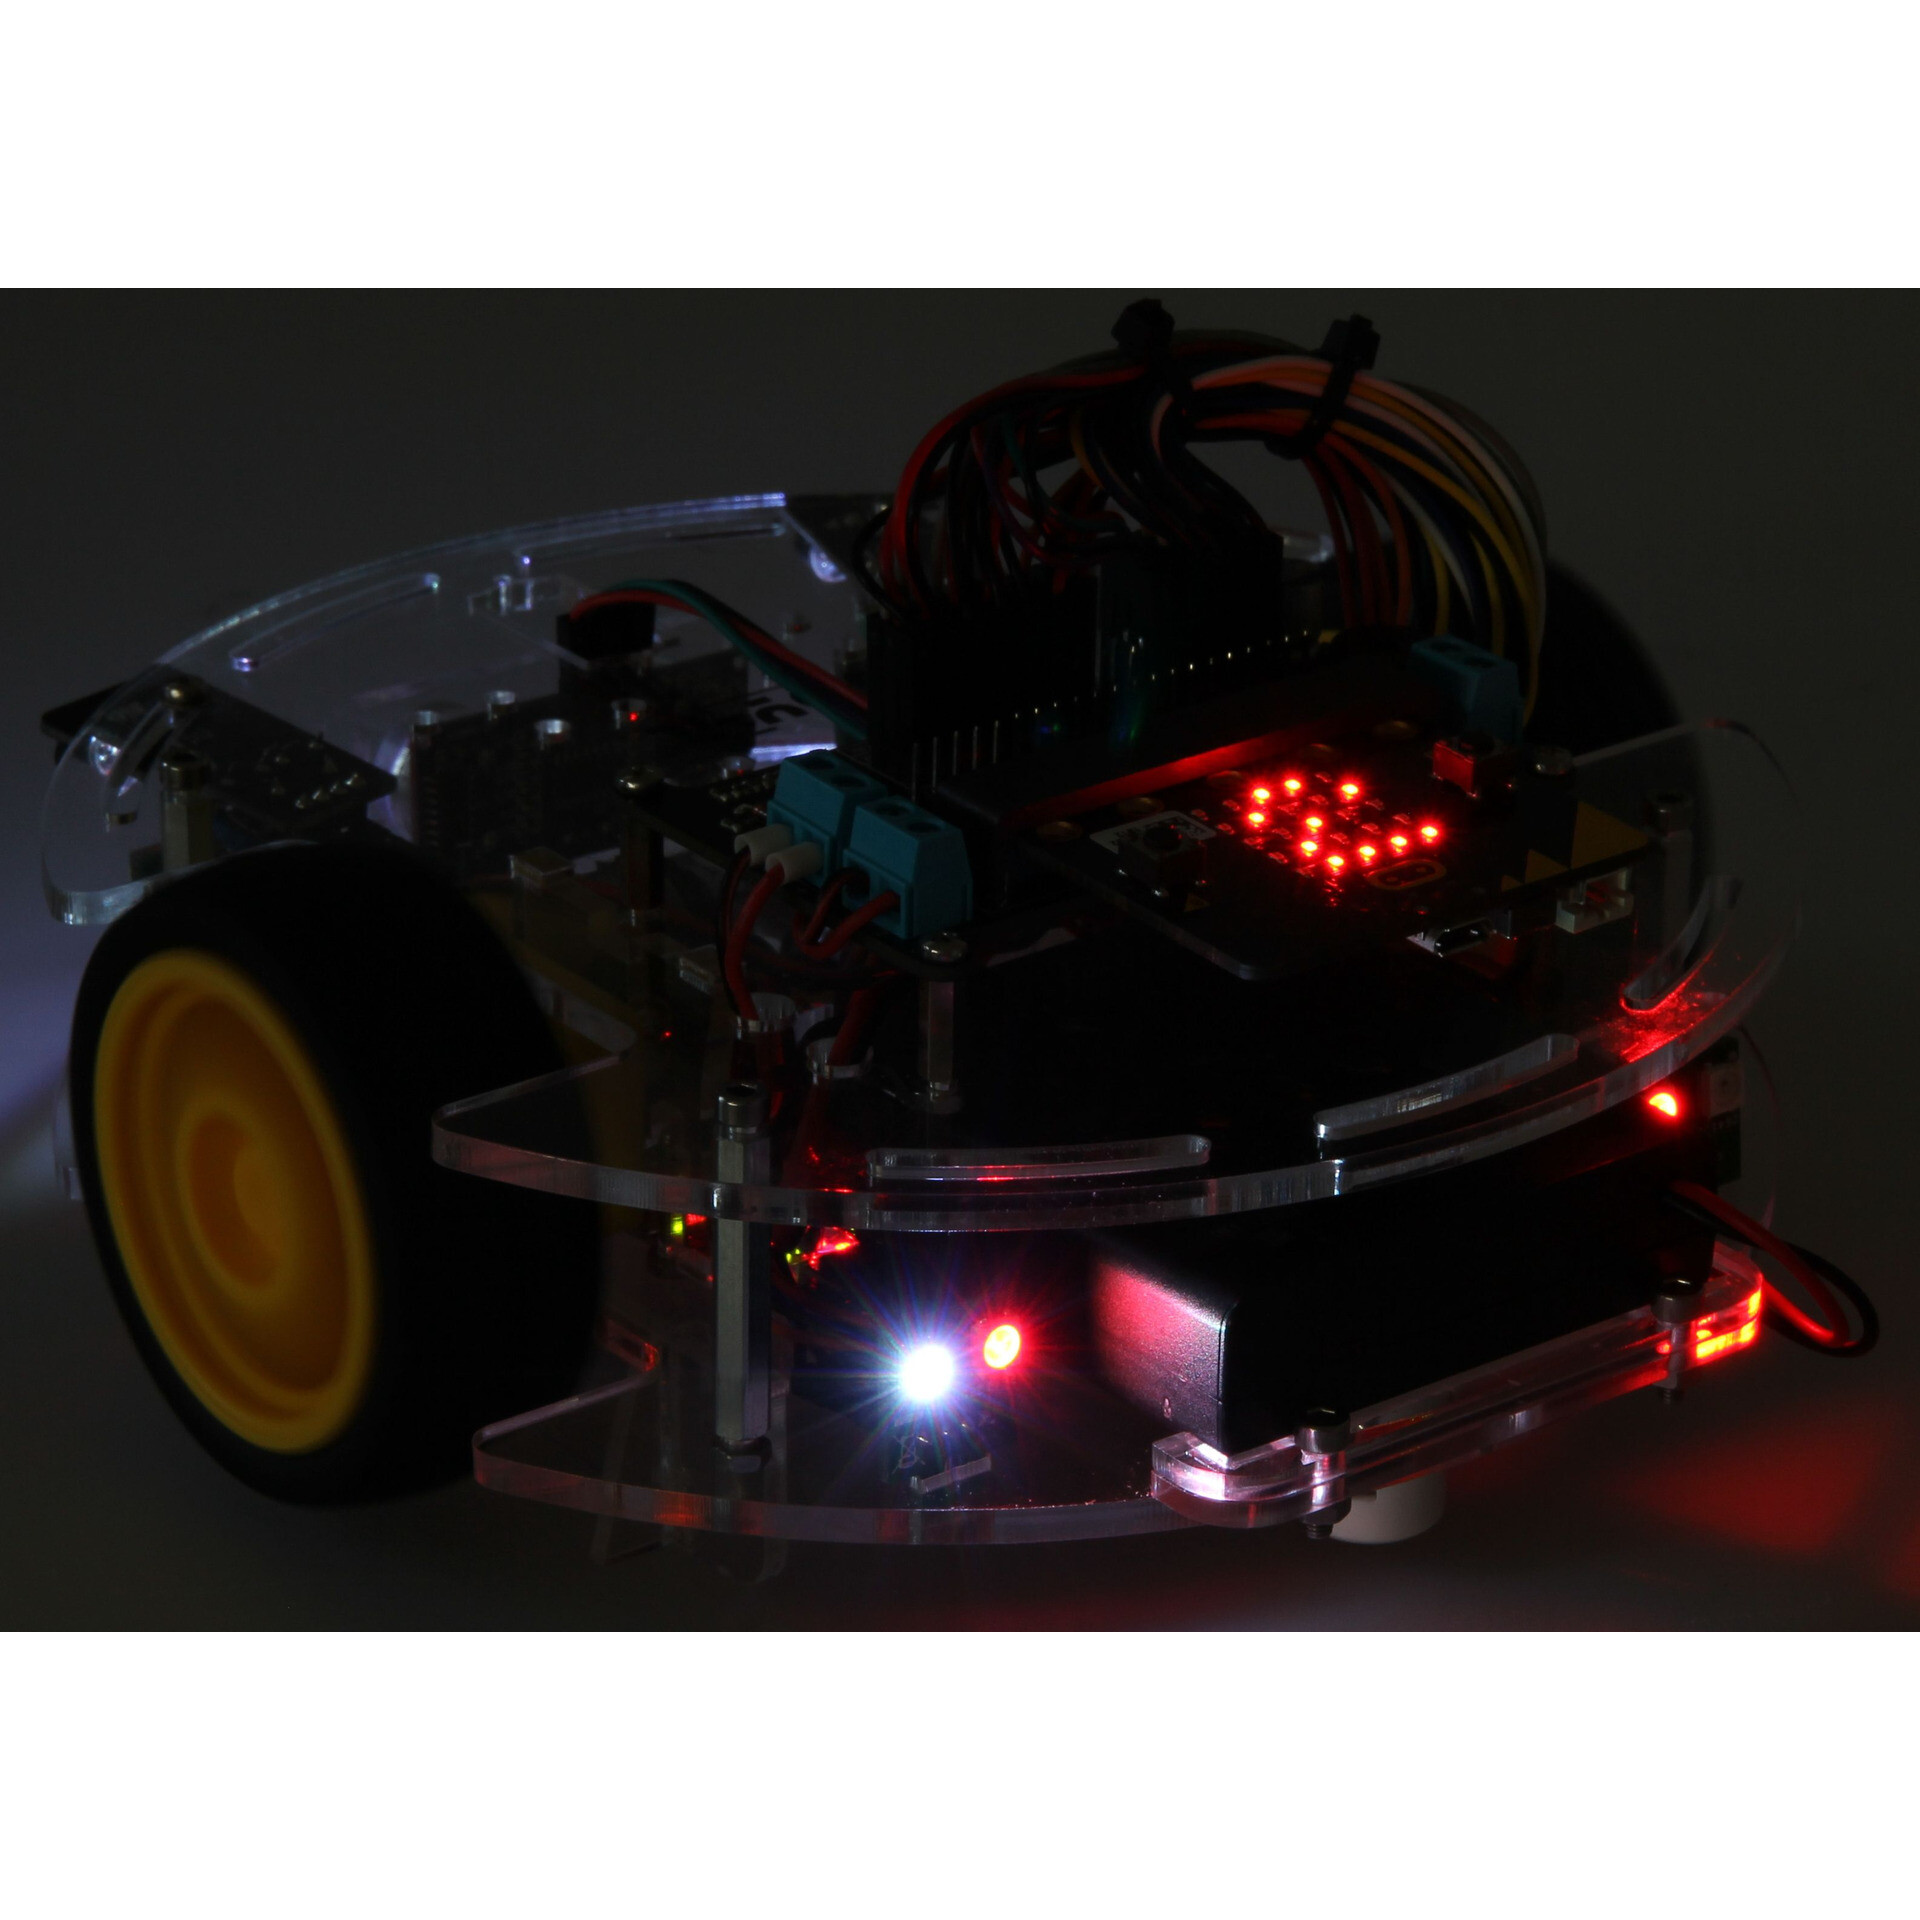 Joy-IT programmierbares Roboterauto Joy-Car inkl. micro:bit v2 und beweglichem Ultraschallsensor